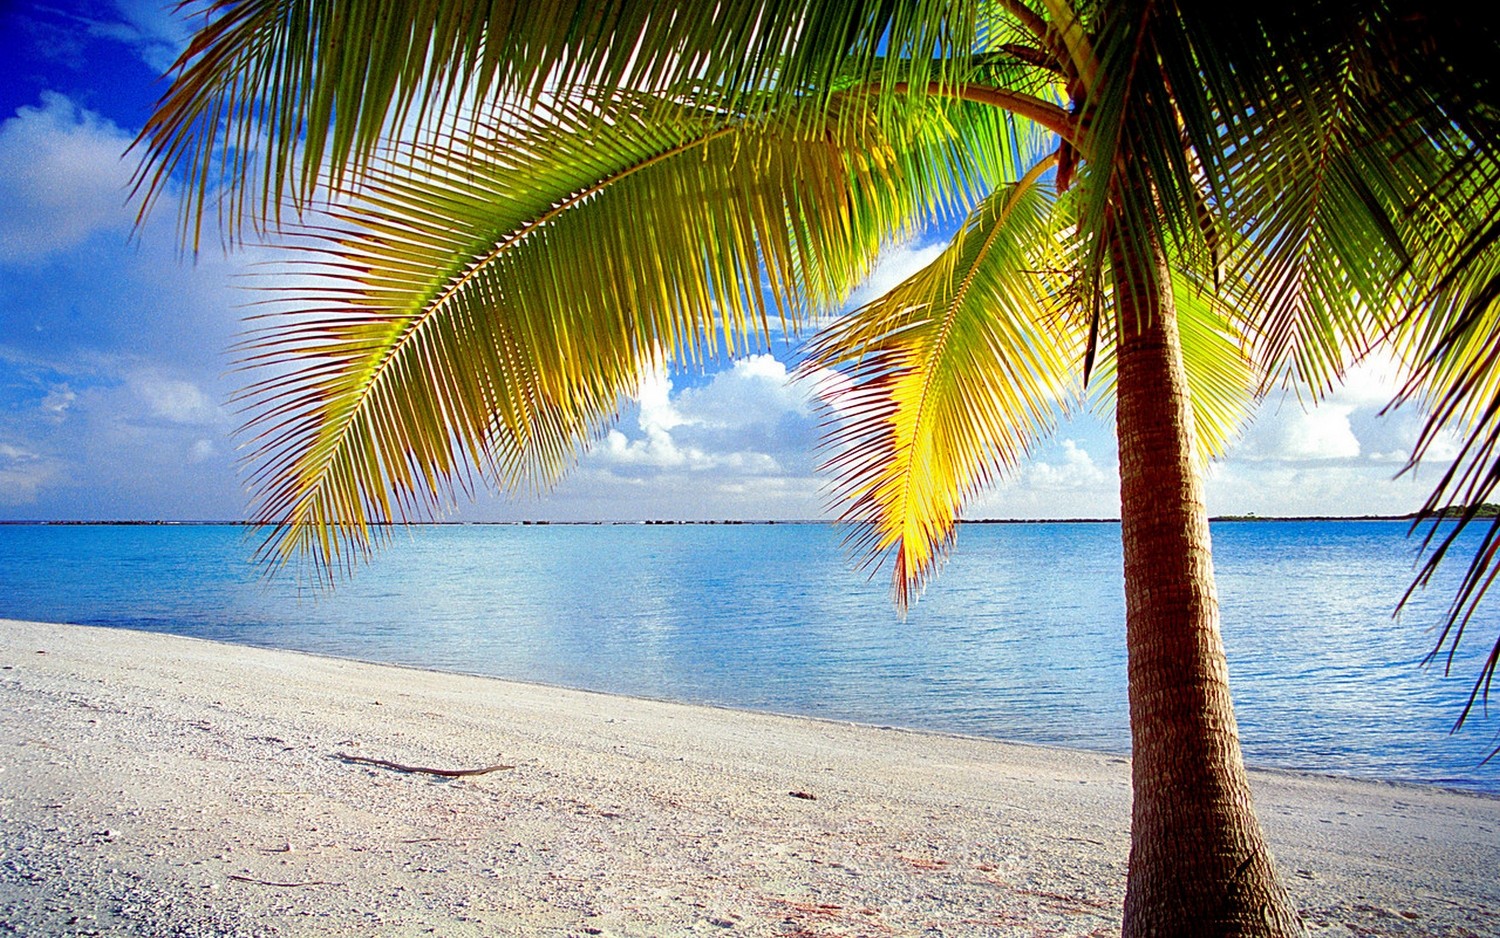 Island French Polynesia Palm Trees Nature Beach Tropical Sea Landscape Sand Clouds 1500x938